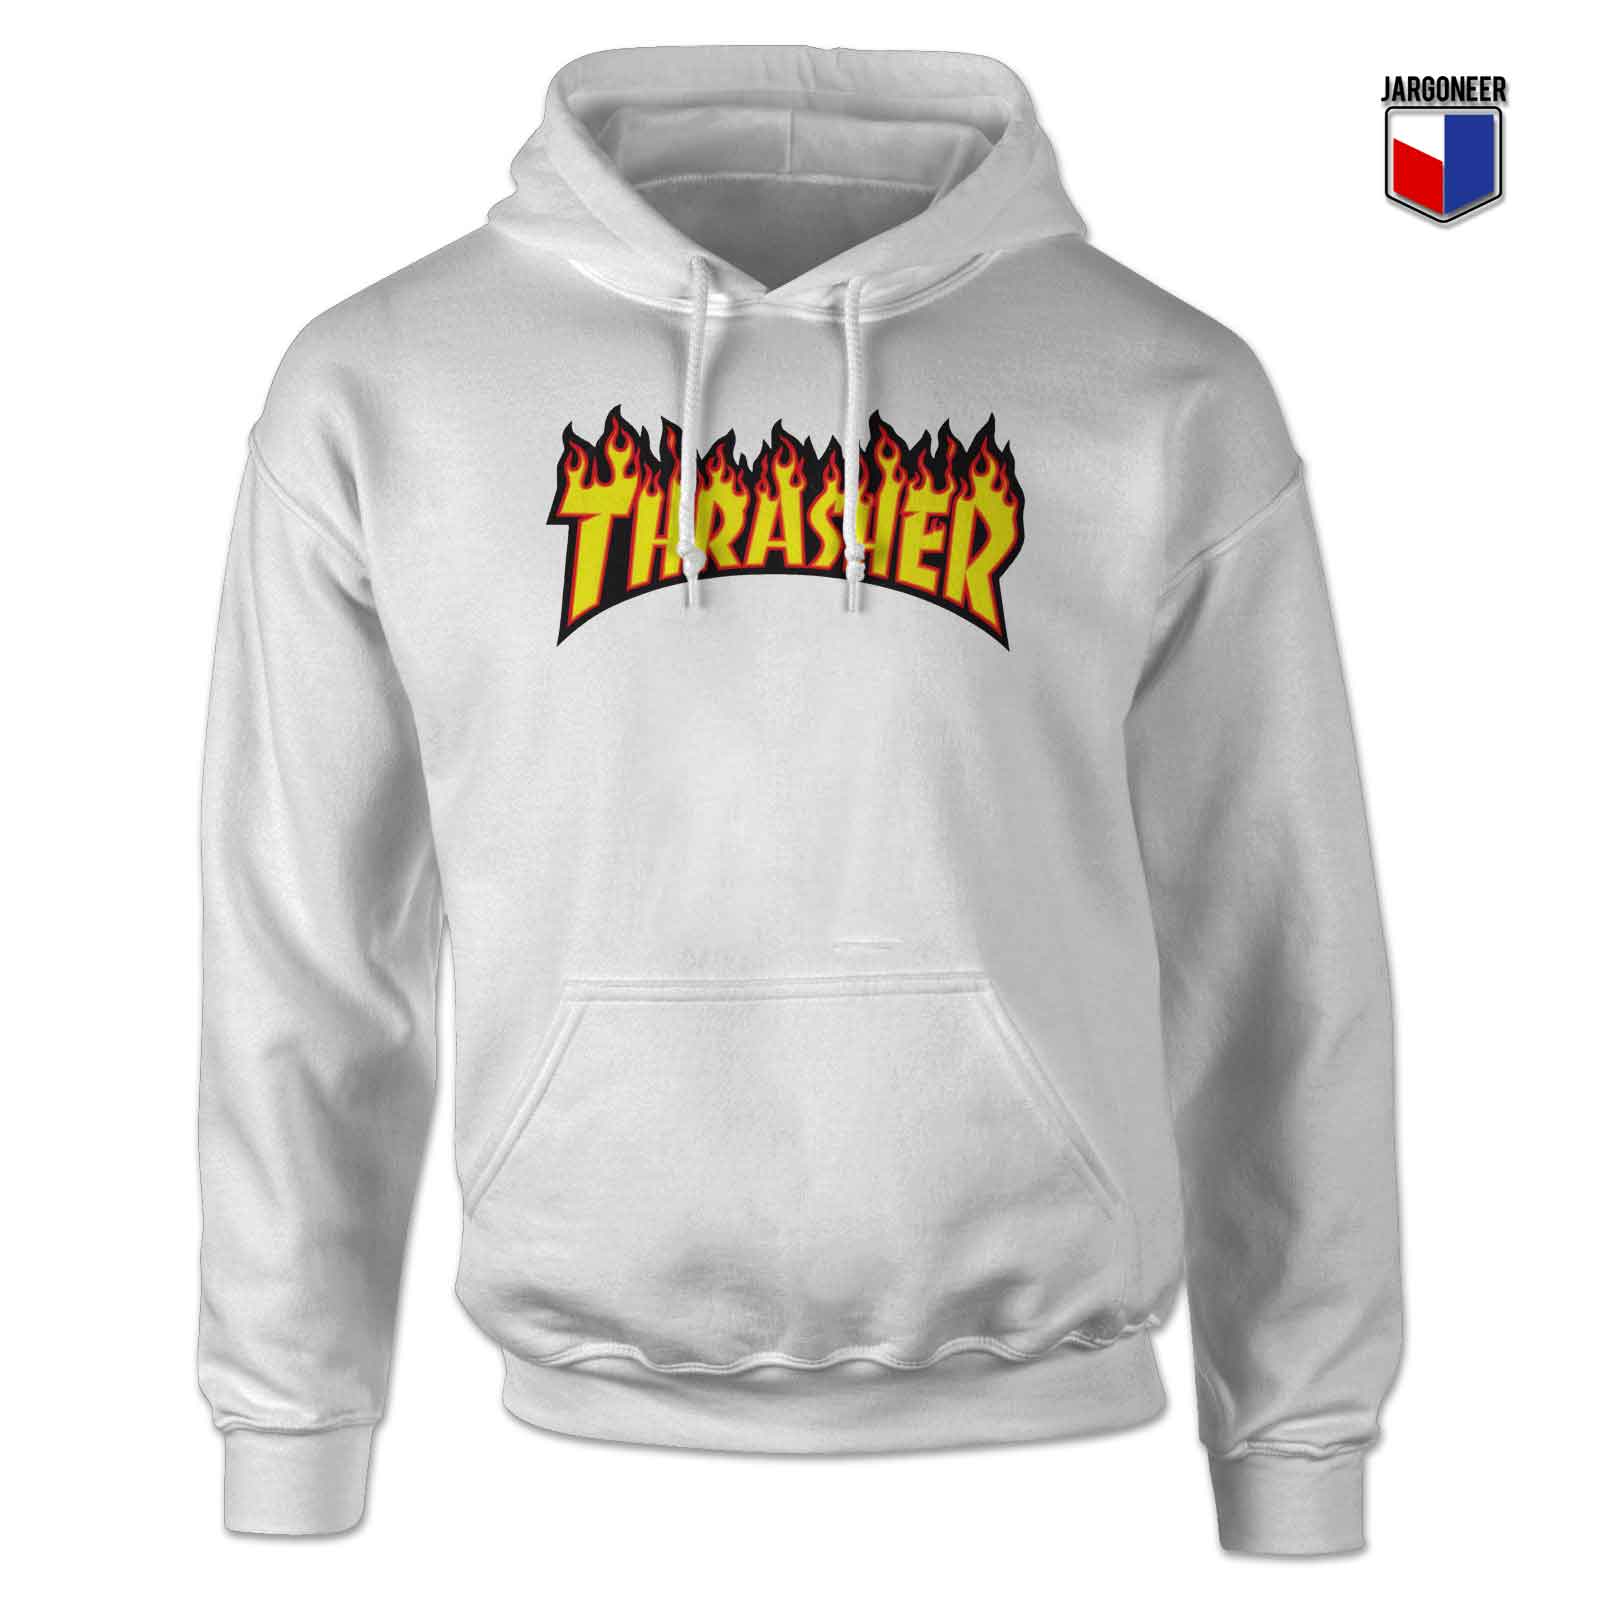 Thrasher Flame Logo - Shop Unique Graphic Cool Shirt Designs